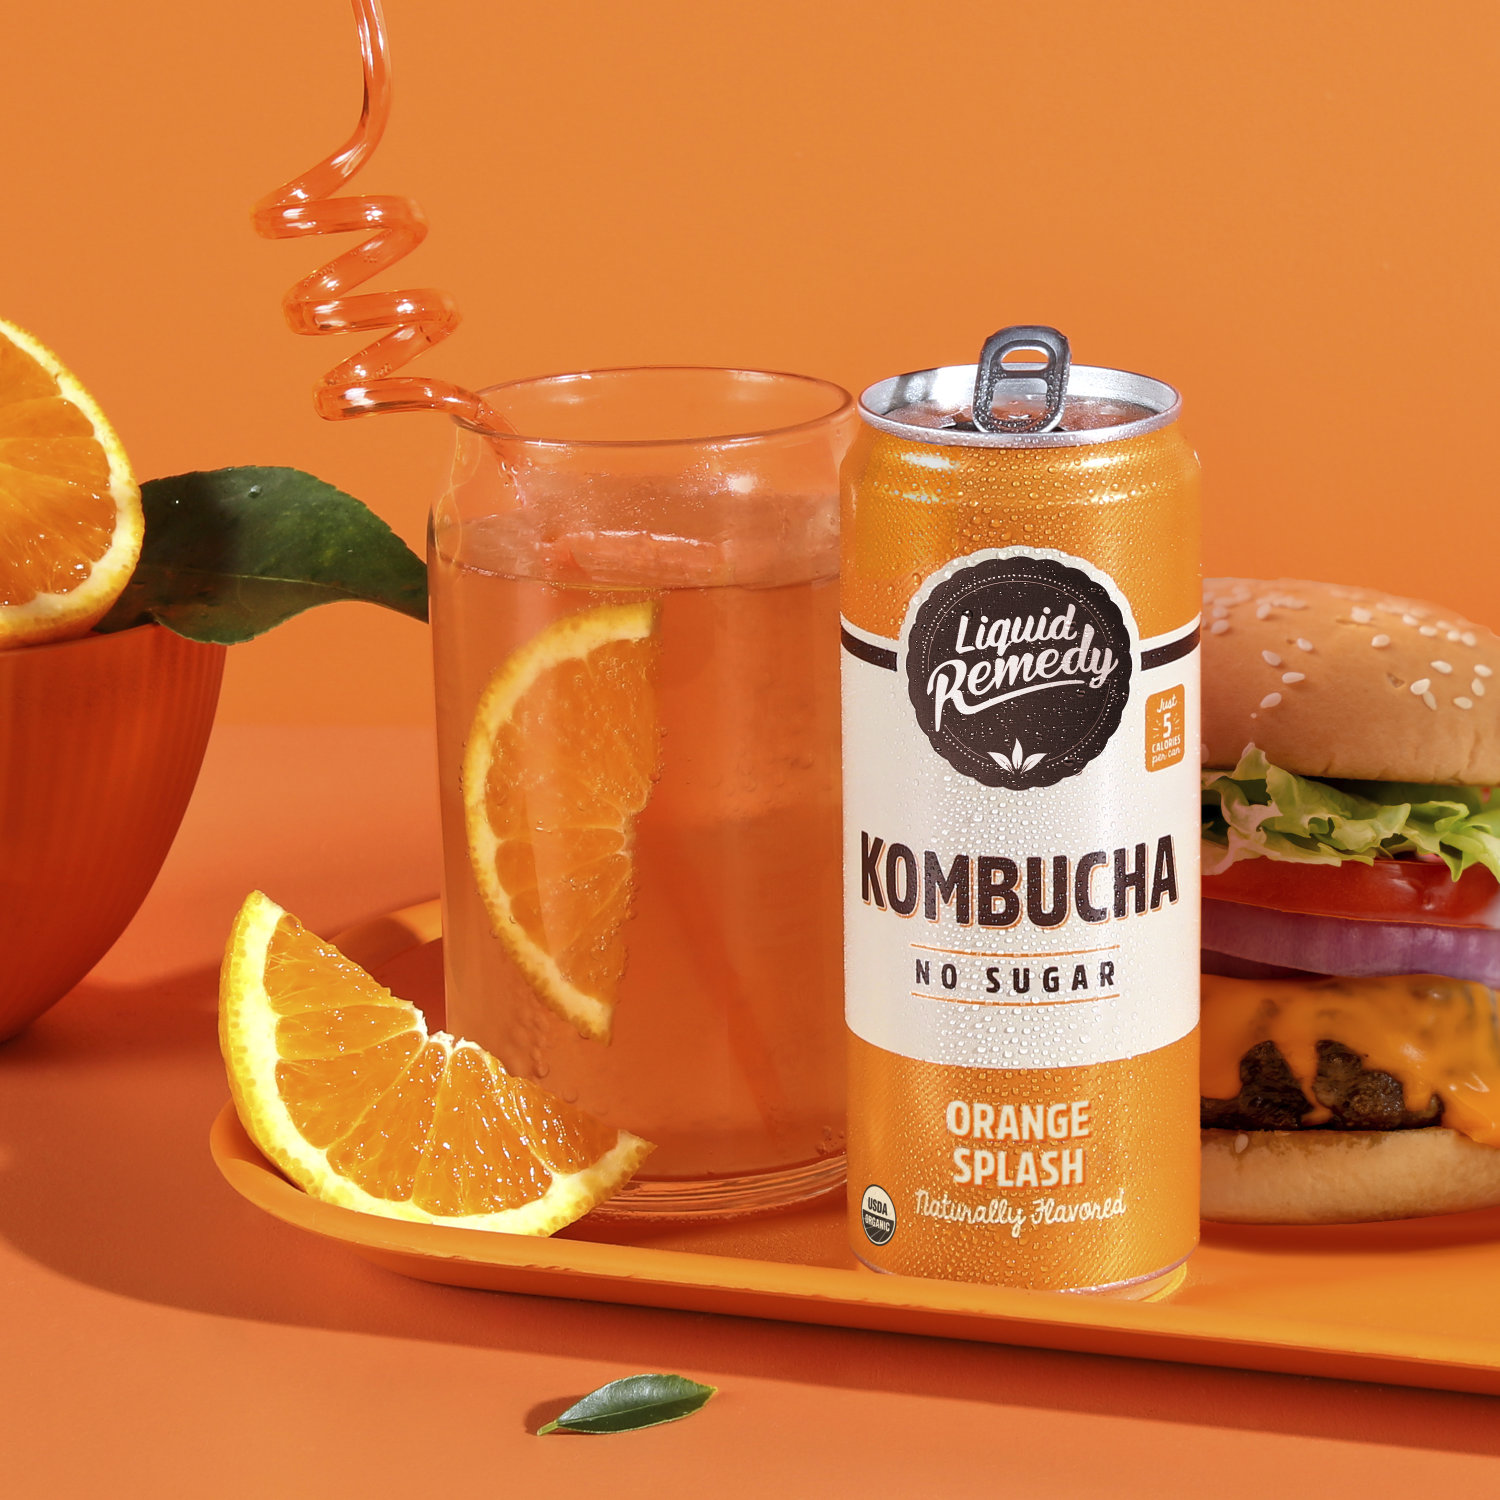 New Liquid Remedy Orange Splash Kombucha